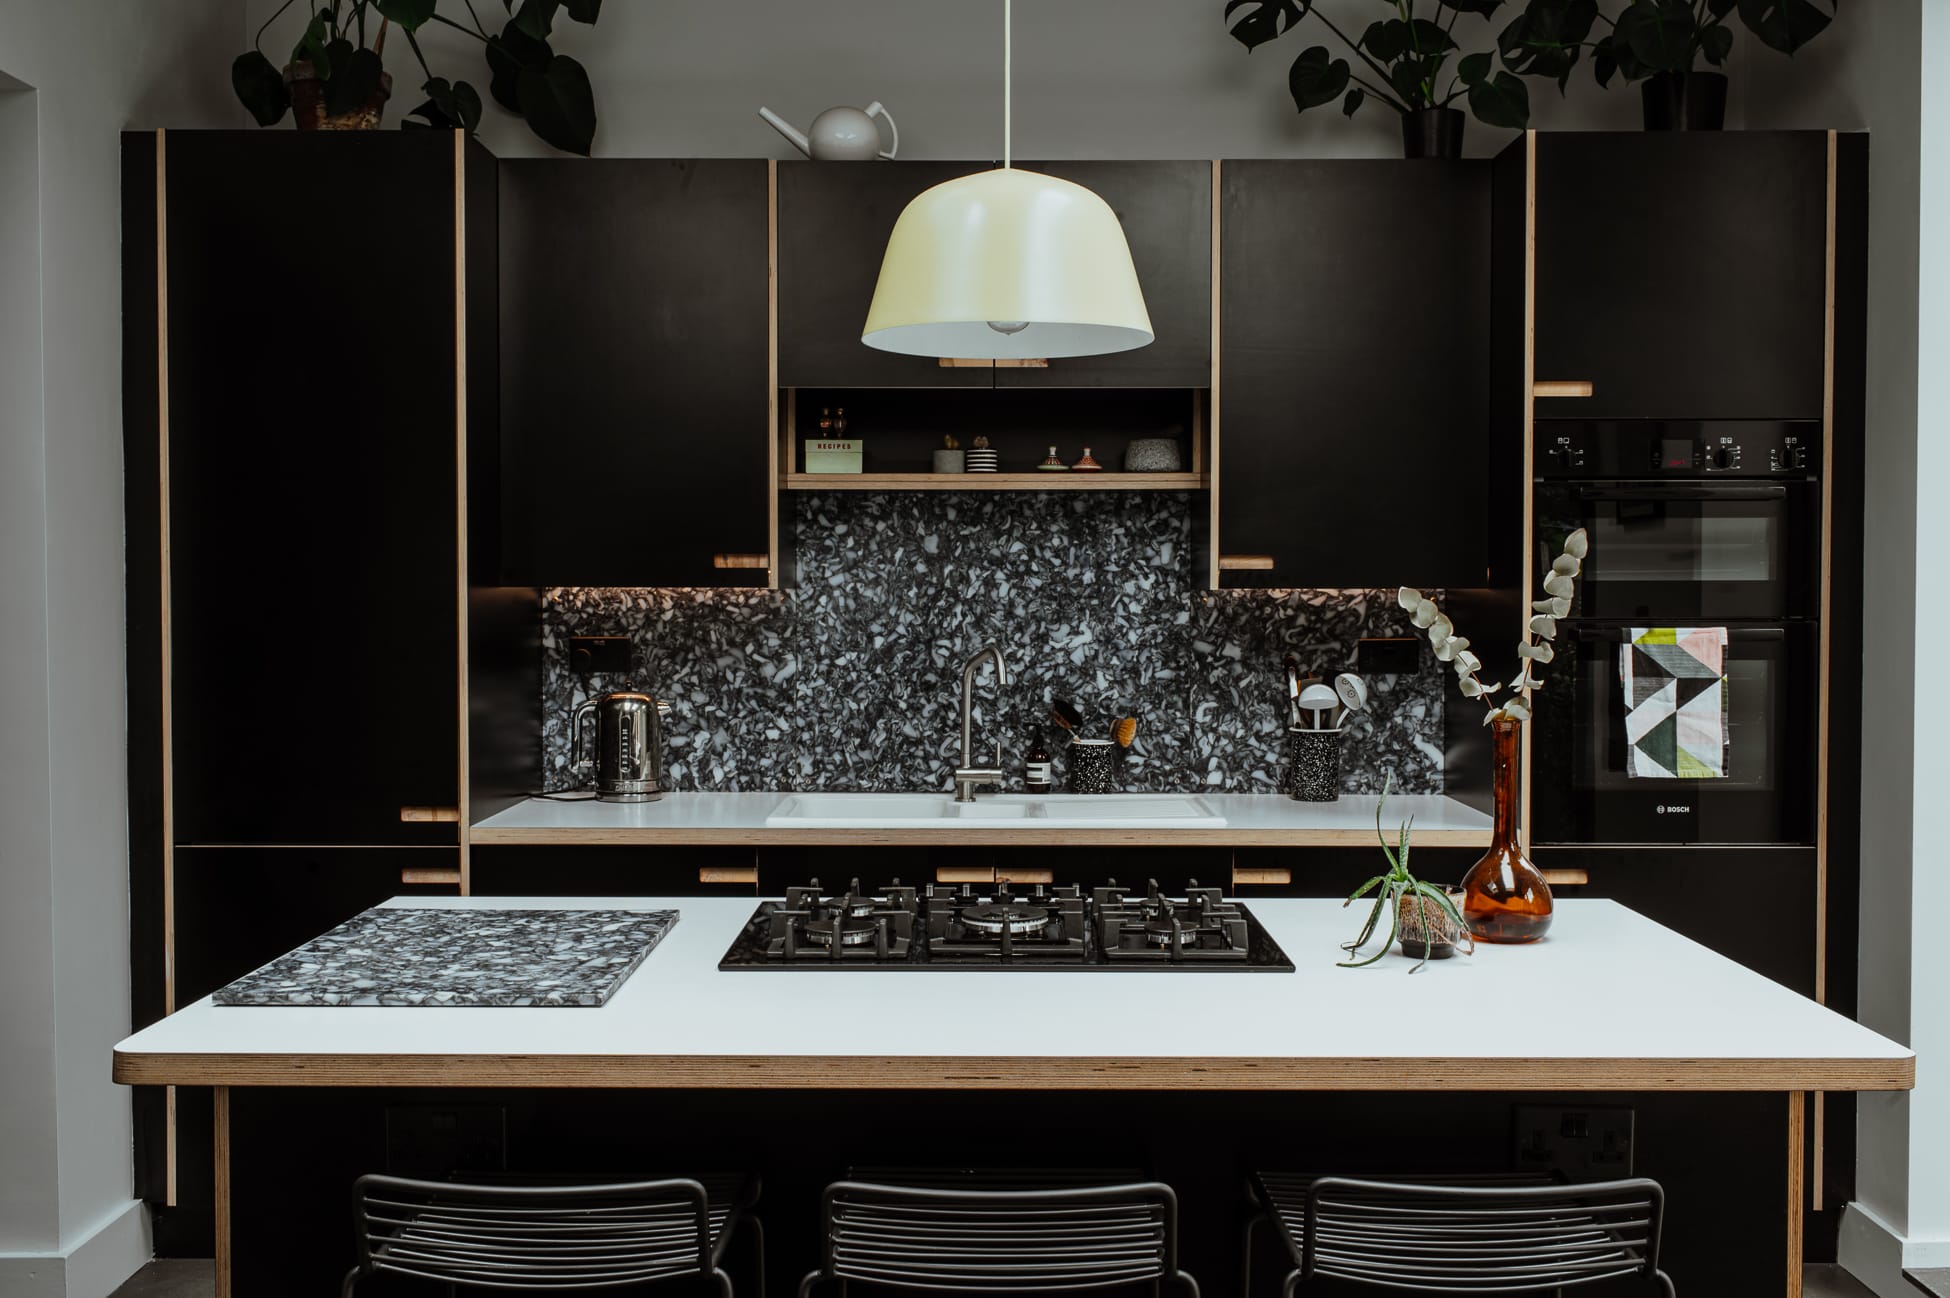 Sleek & Stylish: Inspiring Black & White Kitchen Design Trends